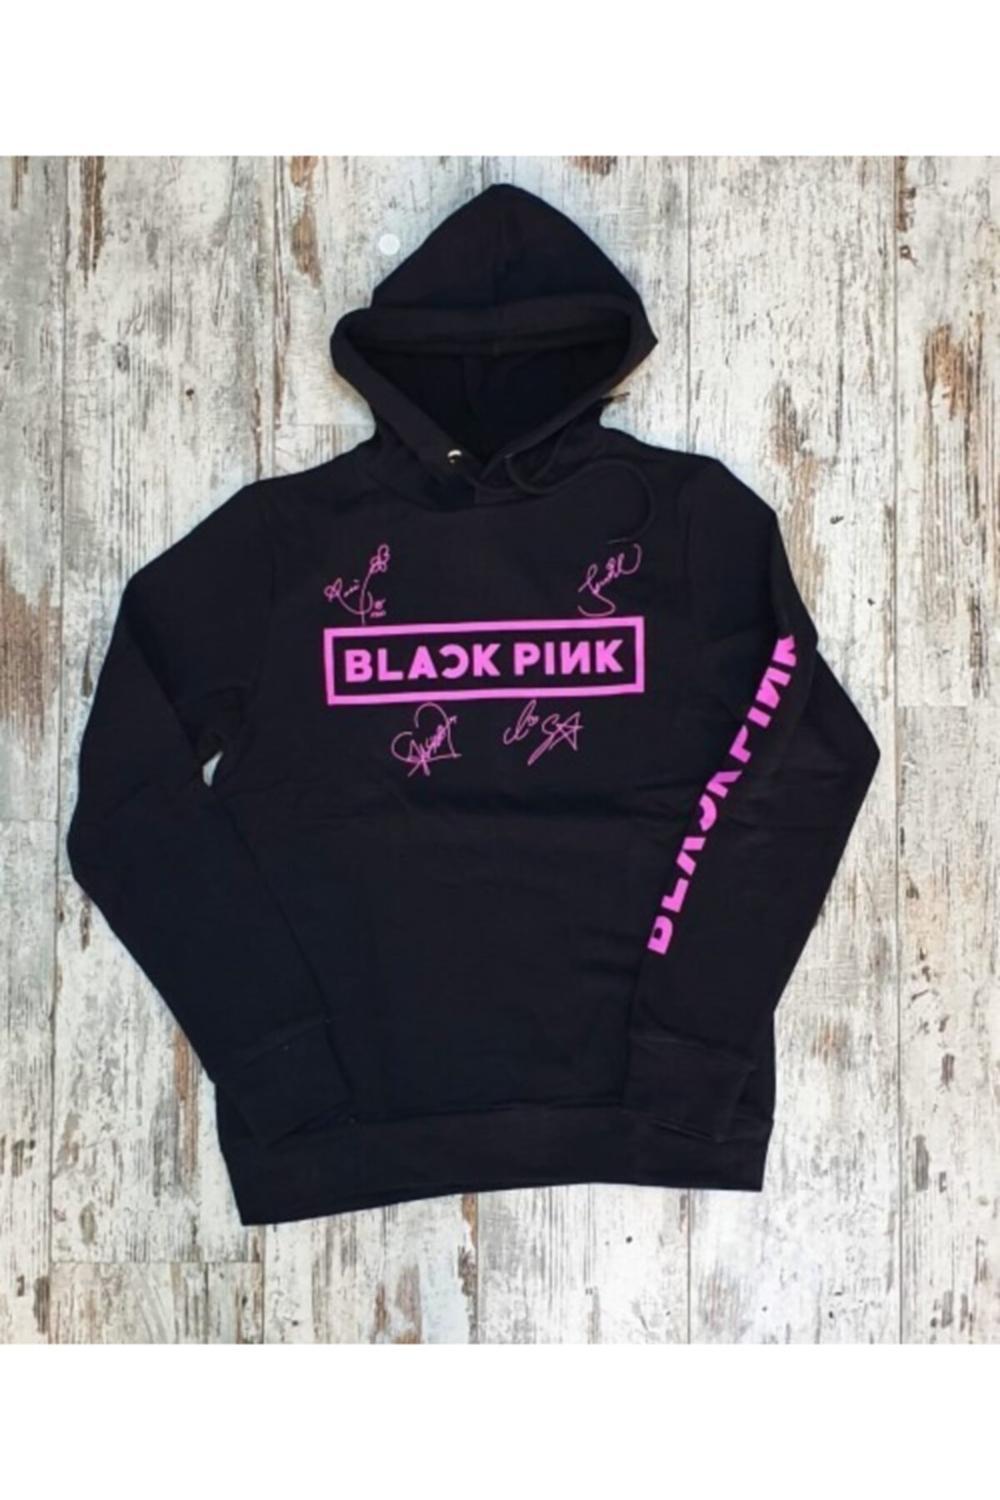 BlackPink Printed Hooded Unisex Autumn Oversize Sweatshirts Women Casual Streetwear Sweat Punk Girls Clothing Tops Korean KPS2007 XL / TURKEY Official Korean Pop Merch